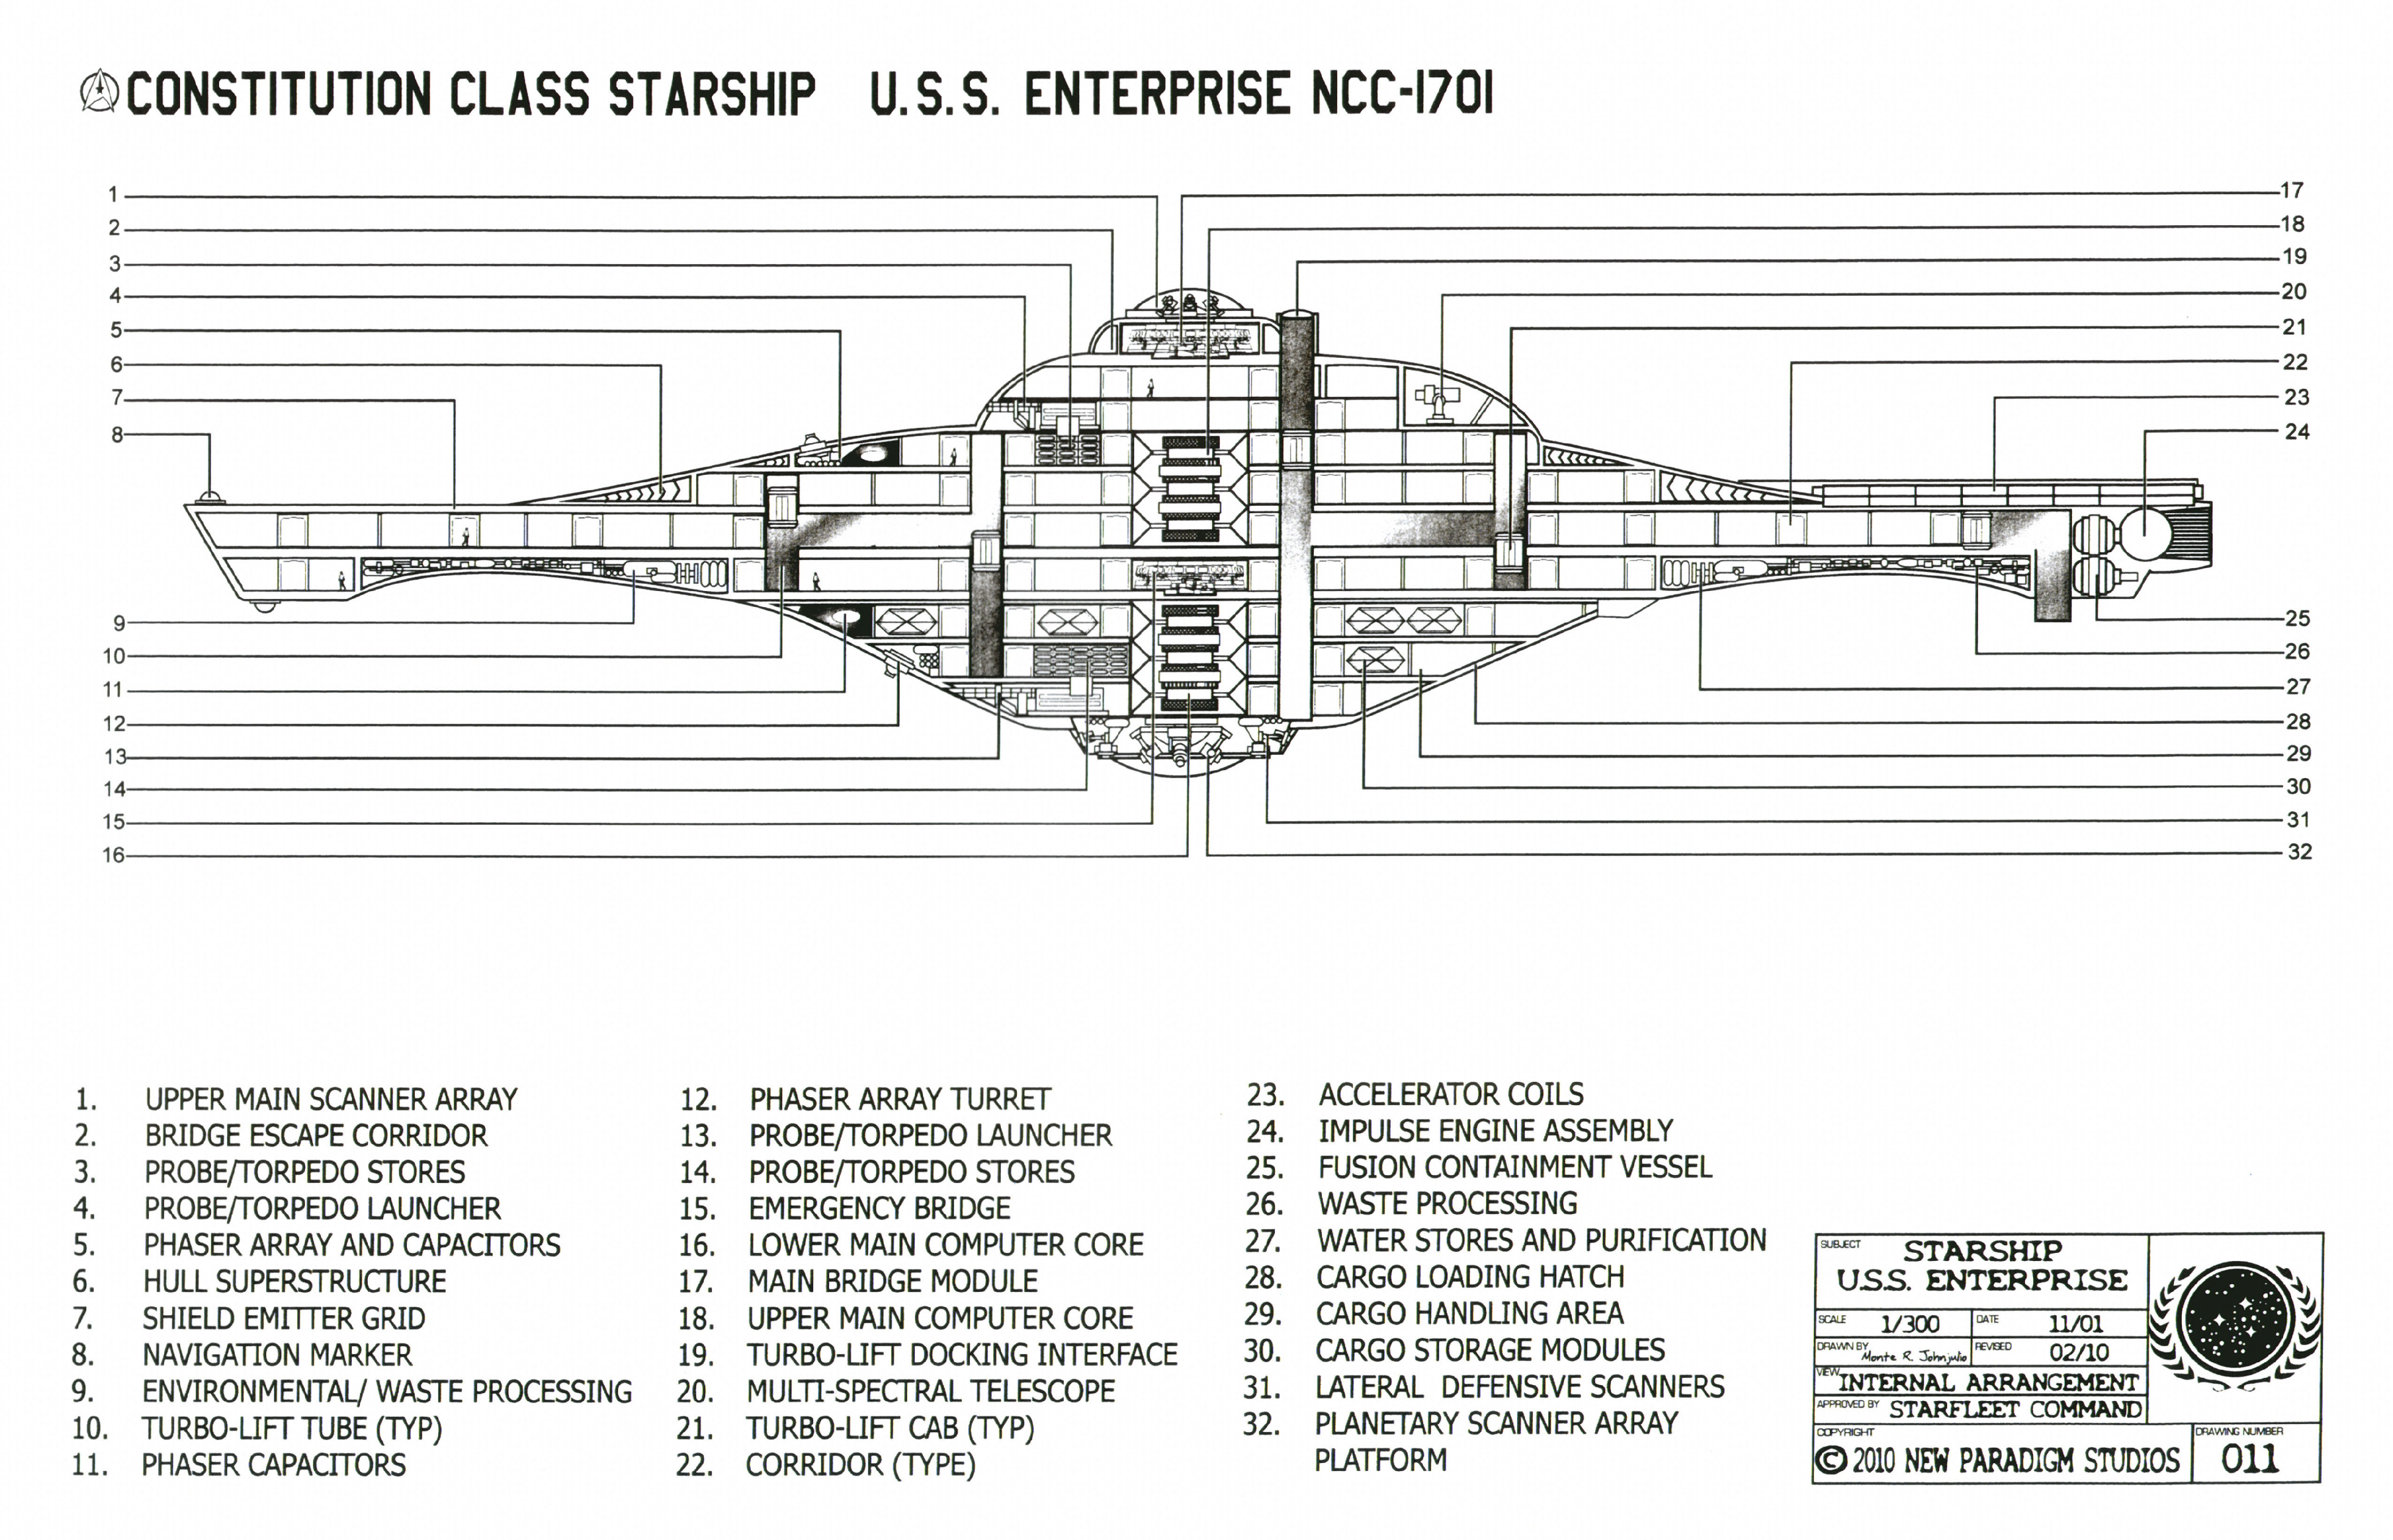 Star Trek Blueprints: Constitution Class Starship - U.S.S. Enterprise ...